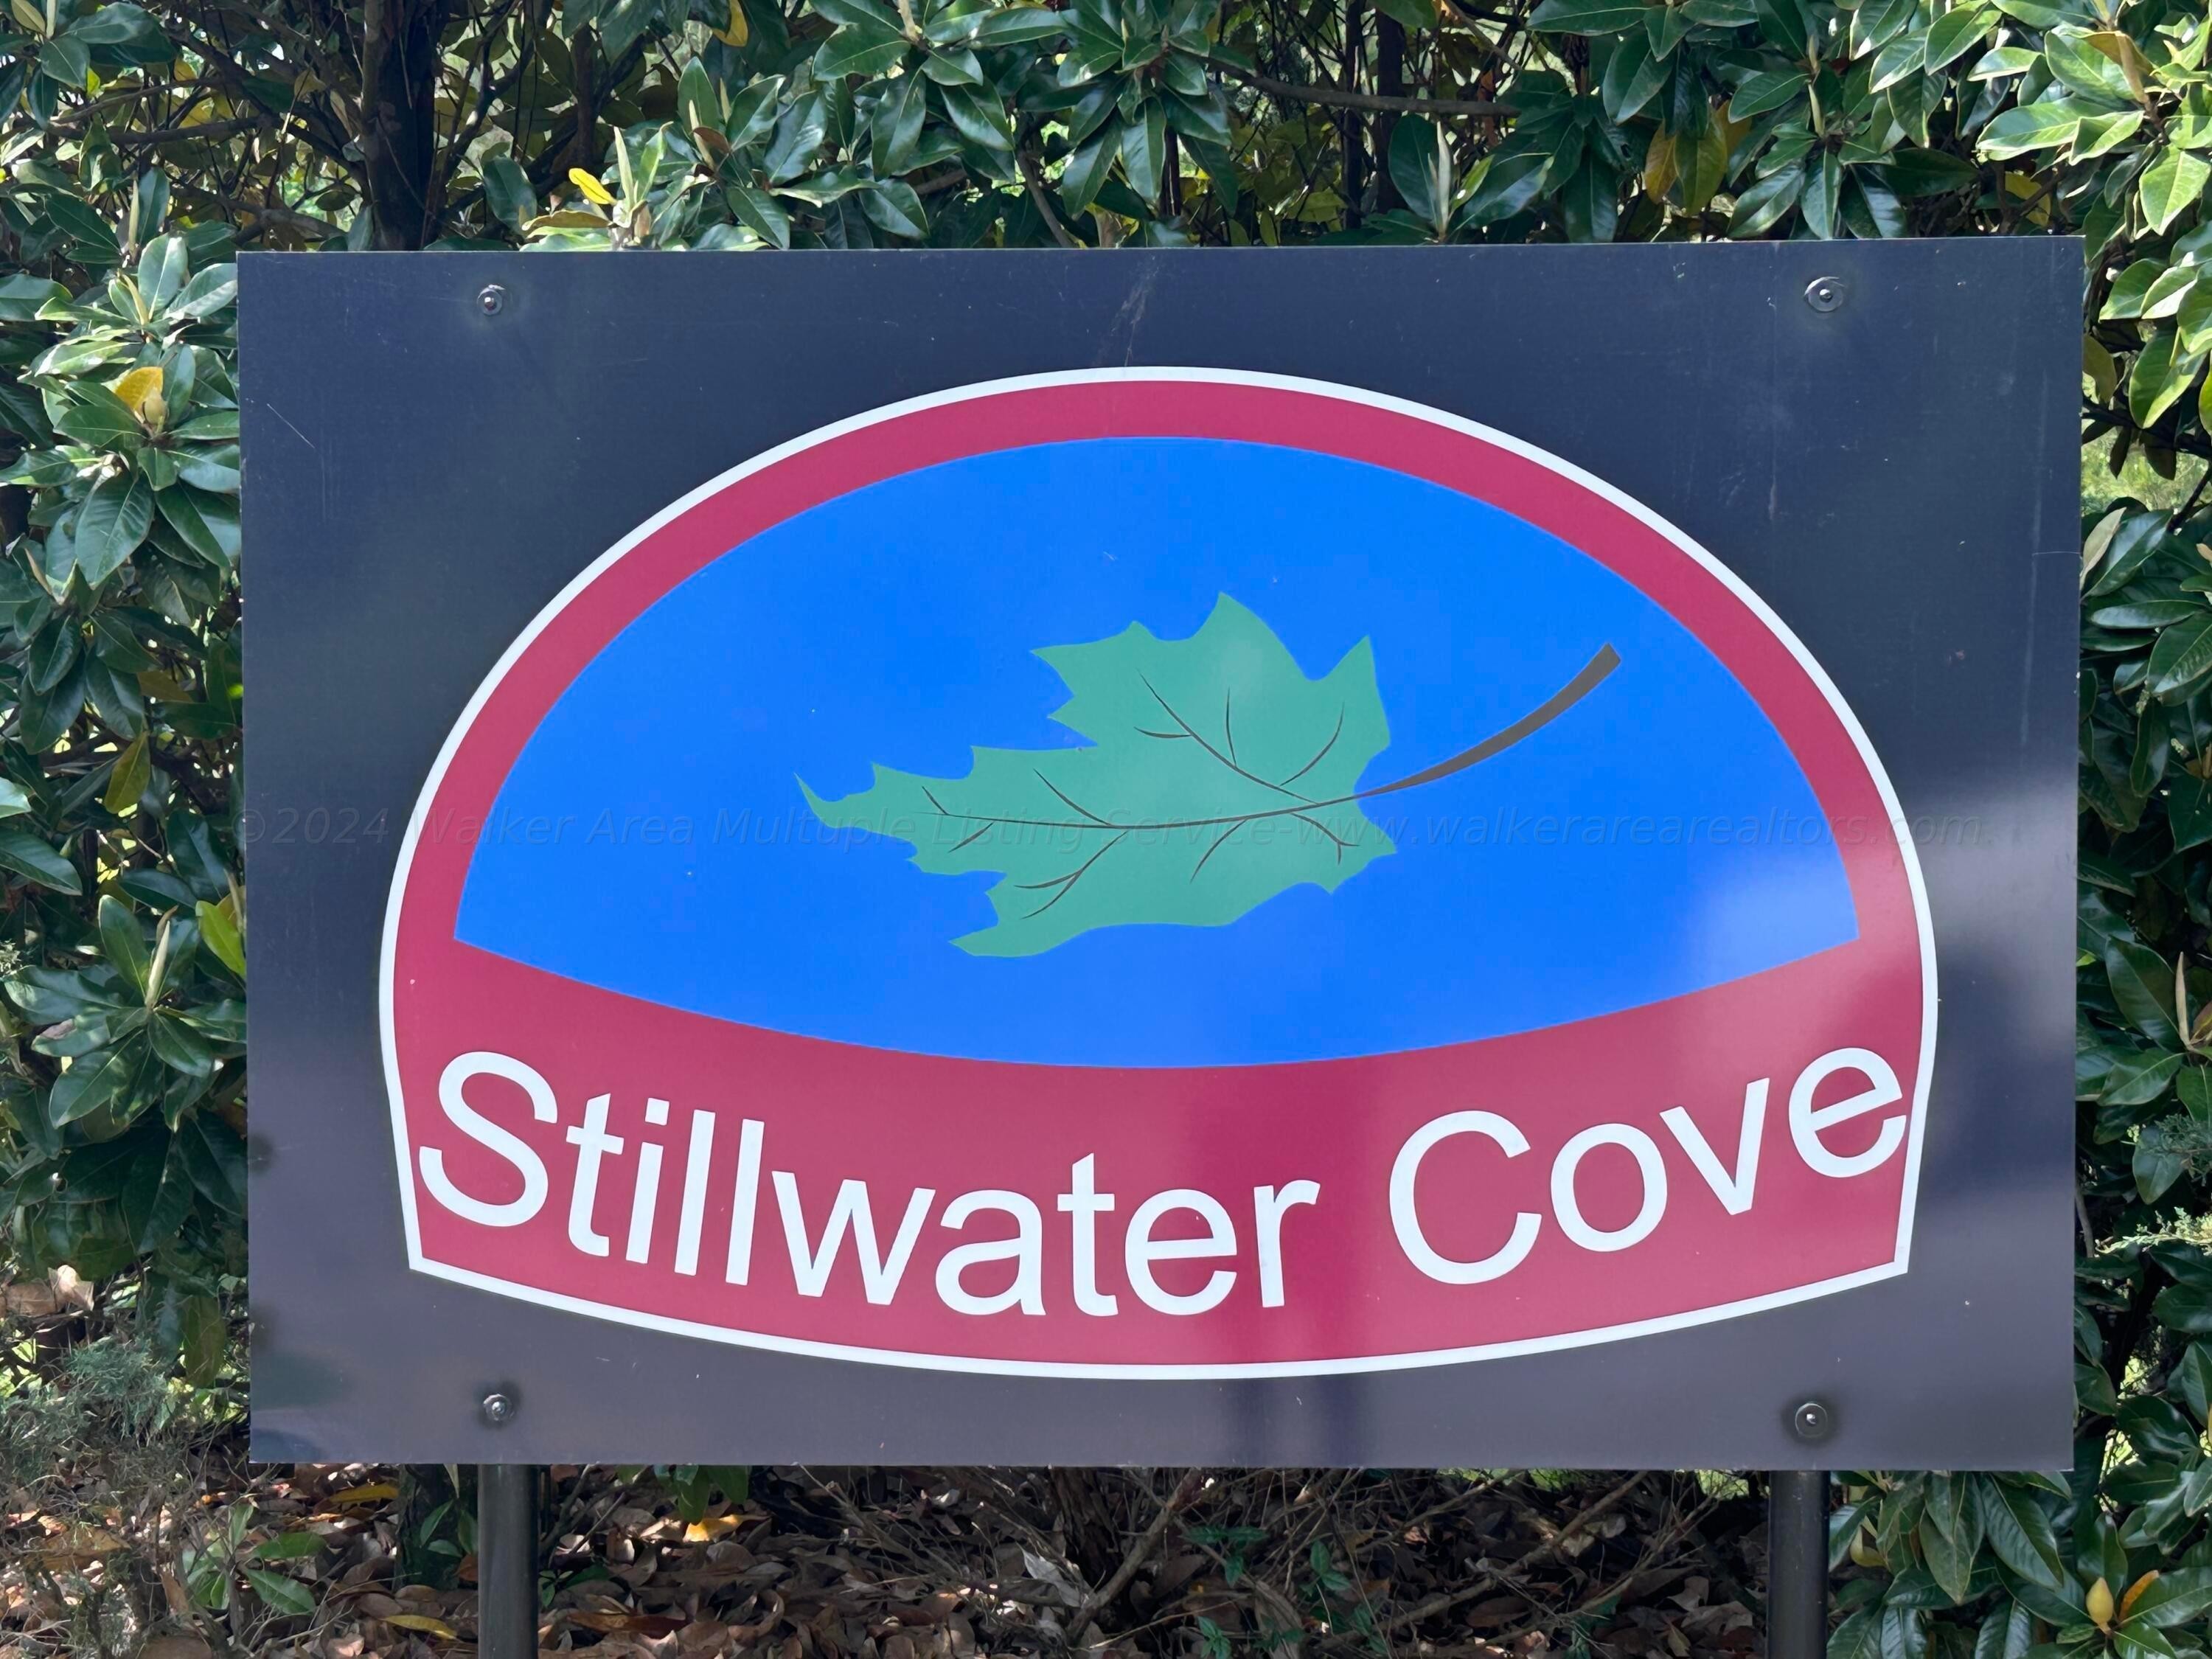 3. Lot 15 Stillwater Cove